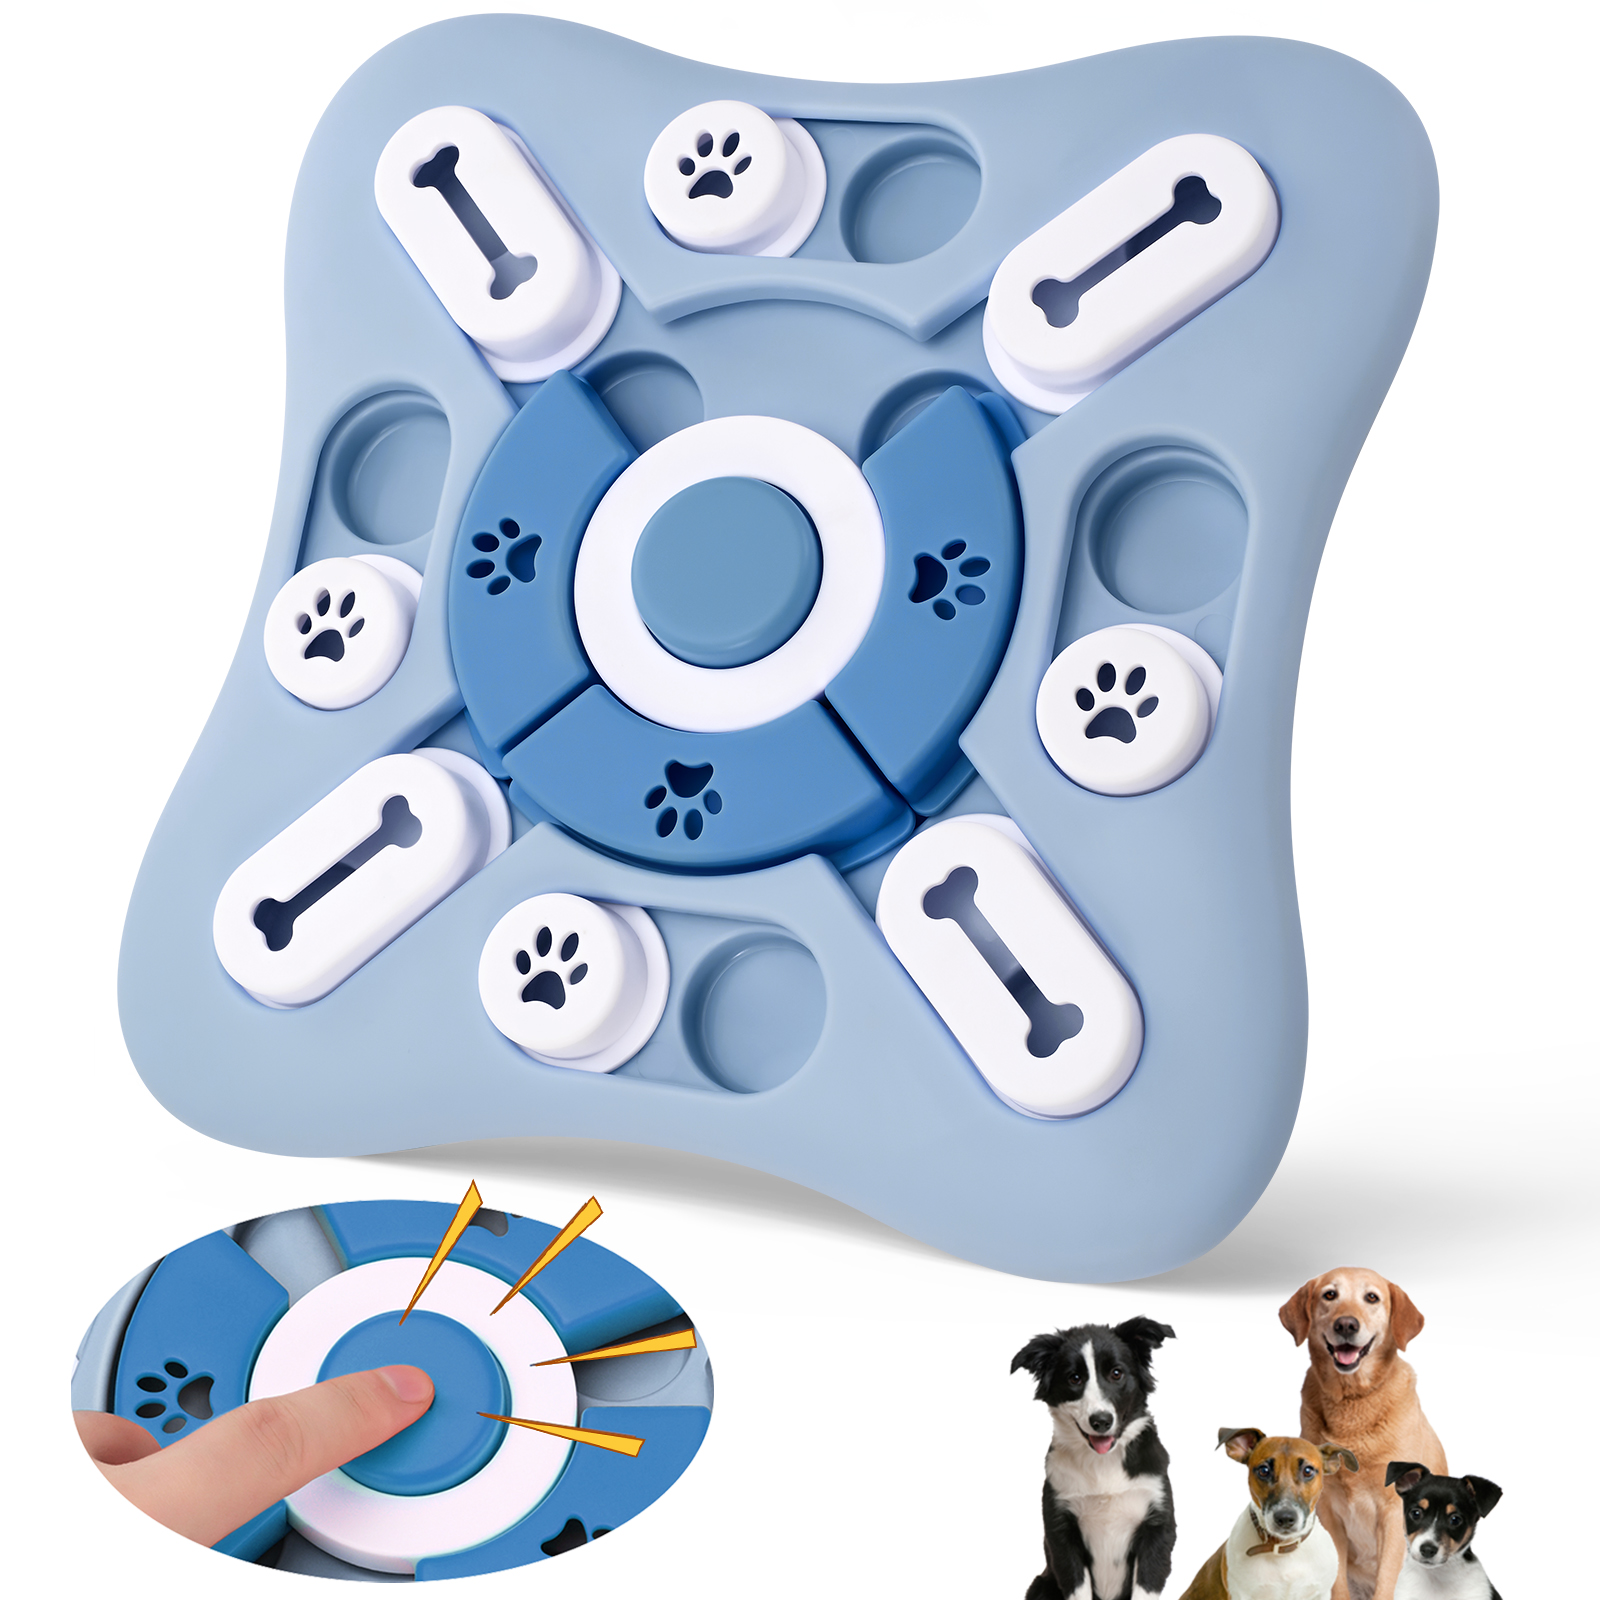 Heiheiup Square Dog Puzzle Toy Dogs Brain Stimulation Mentally